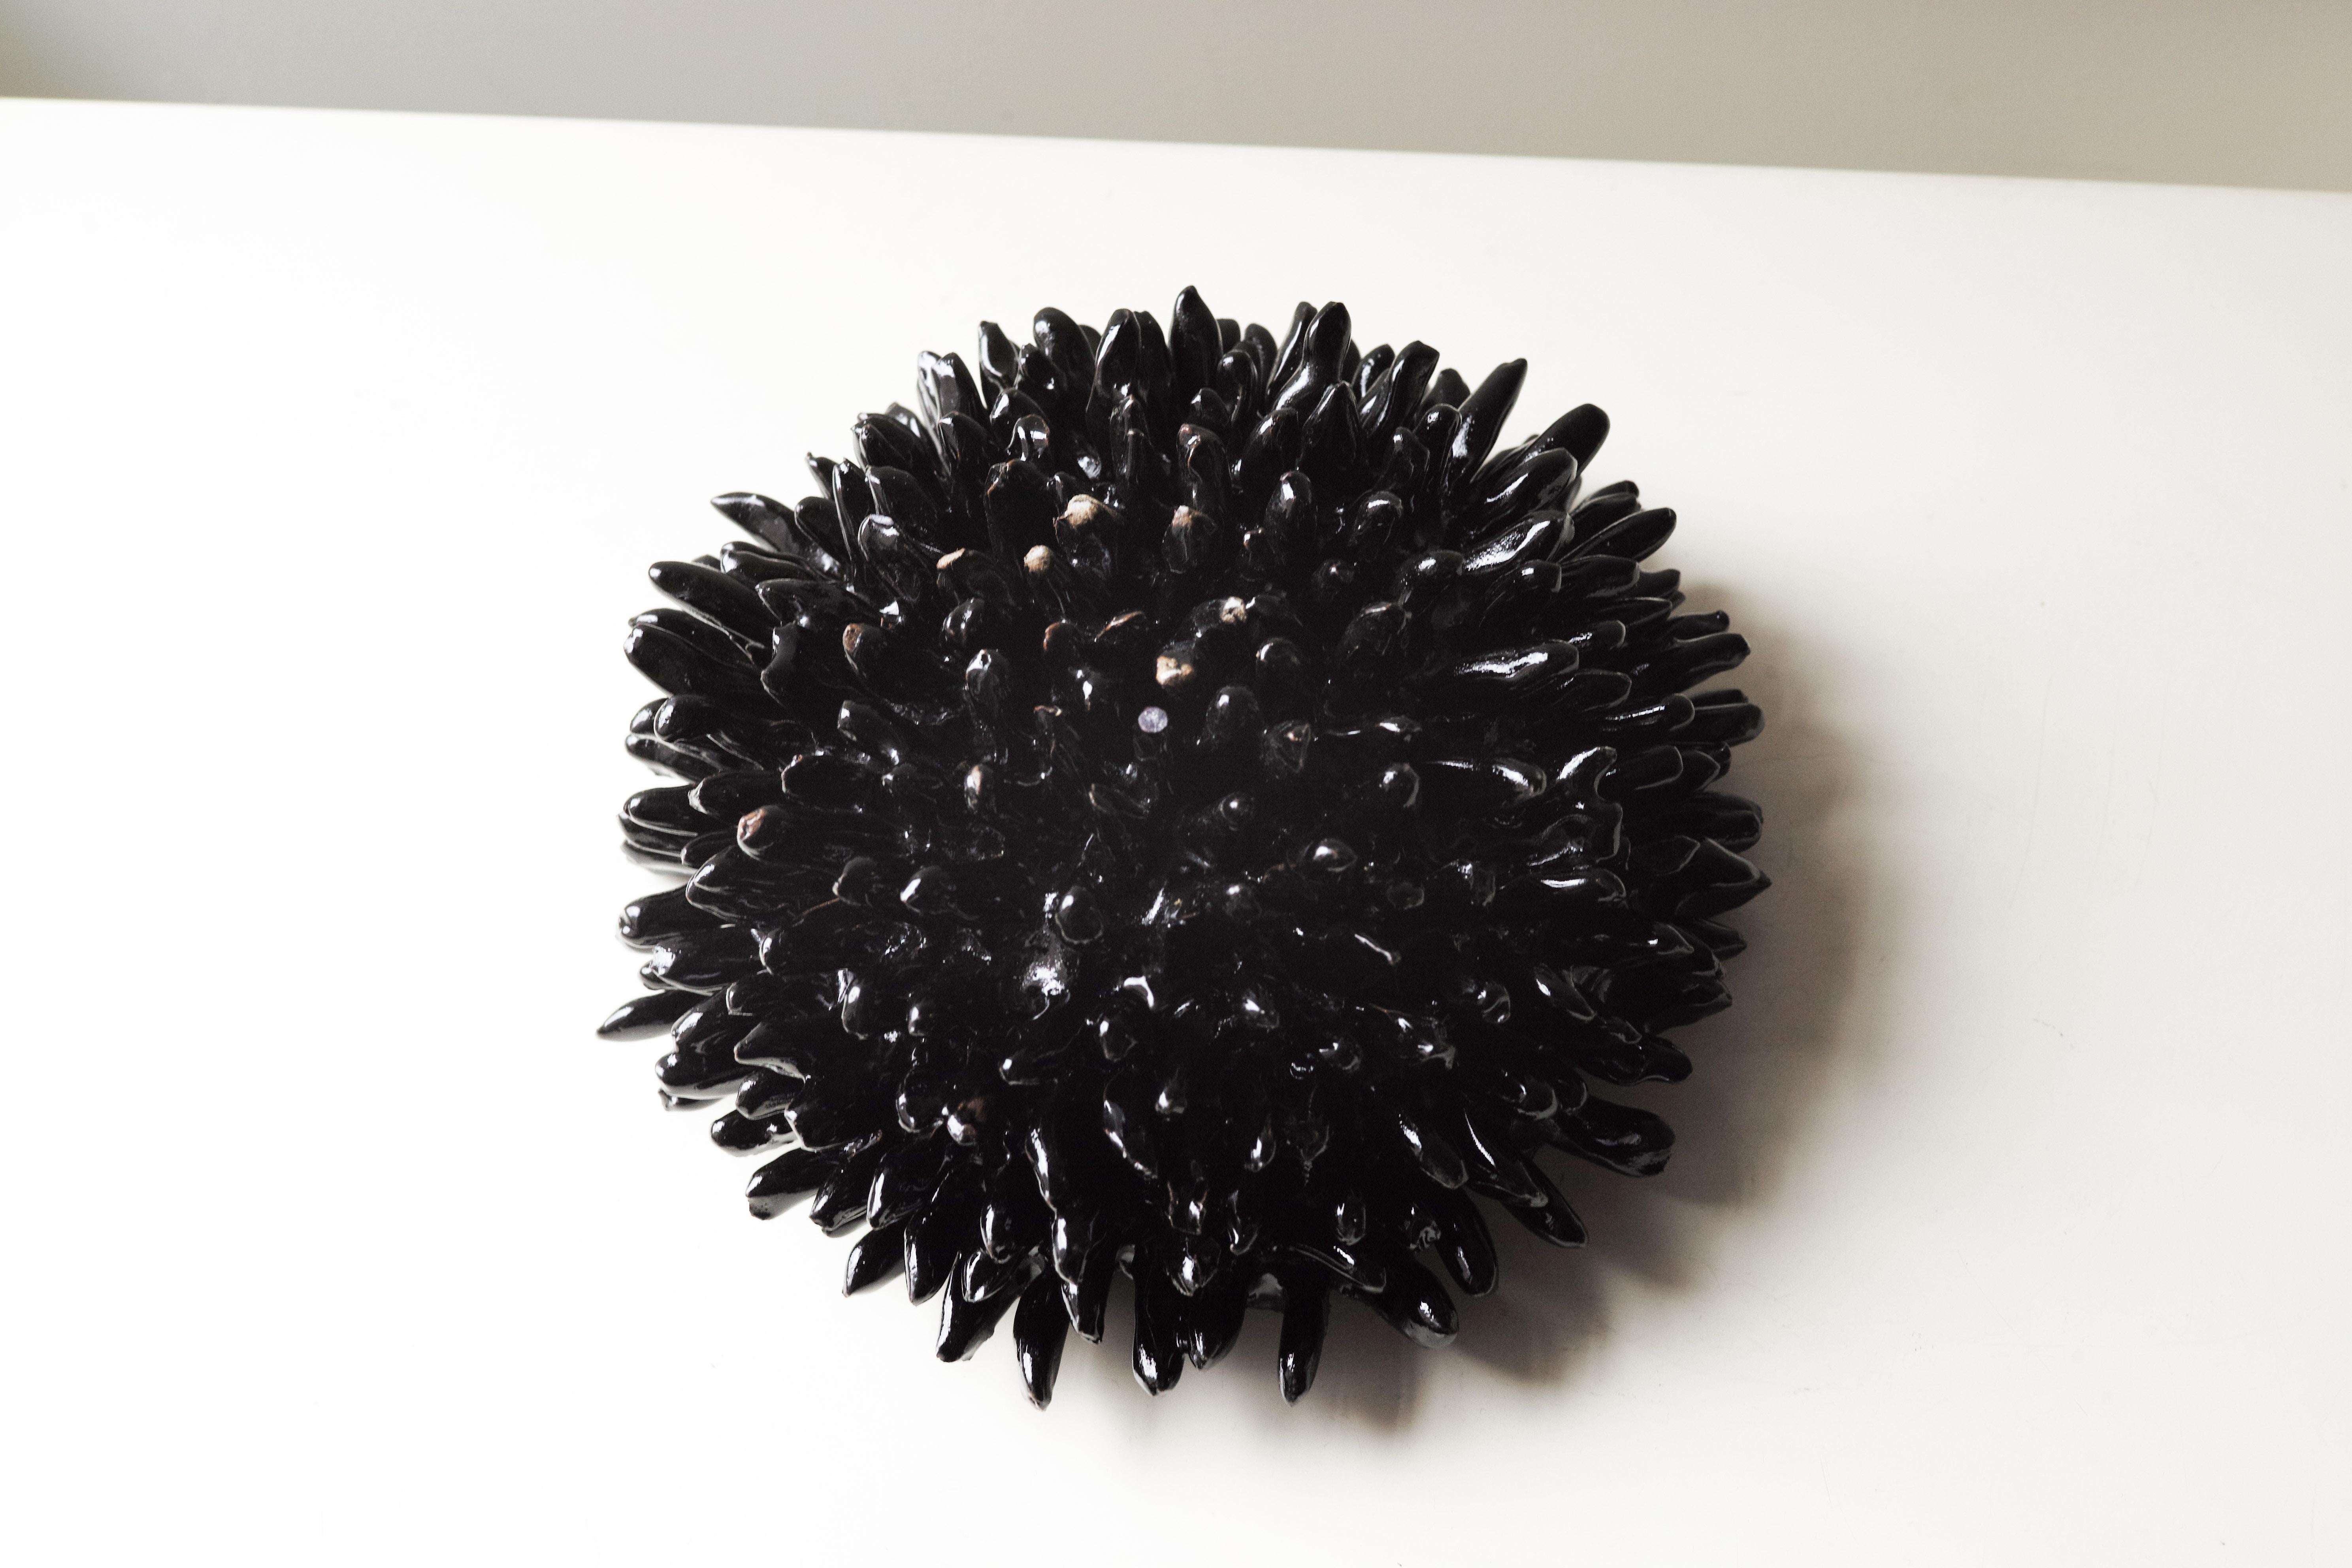 American Contemporary Ceramic Sculptural Black Bowl 'Obsidian' by Lana Kova